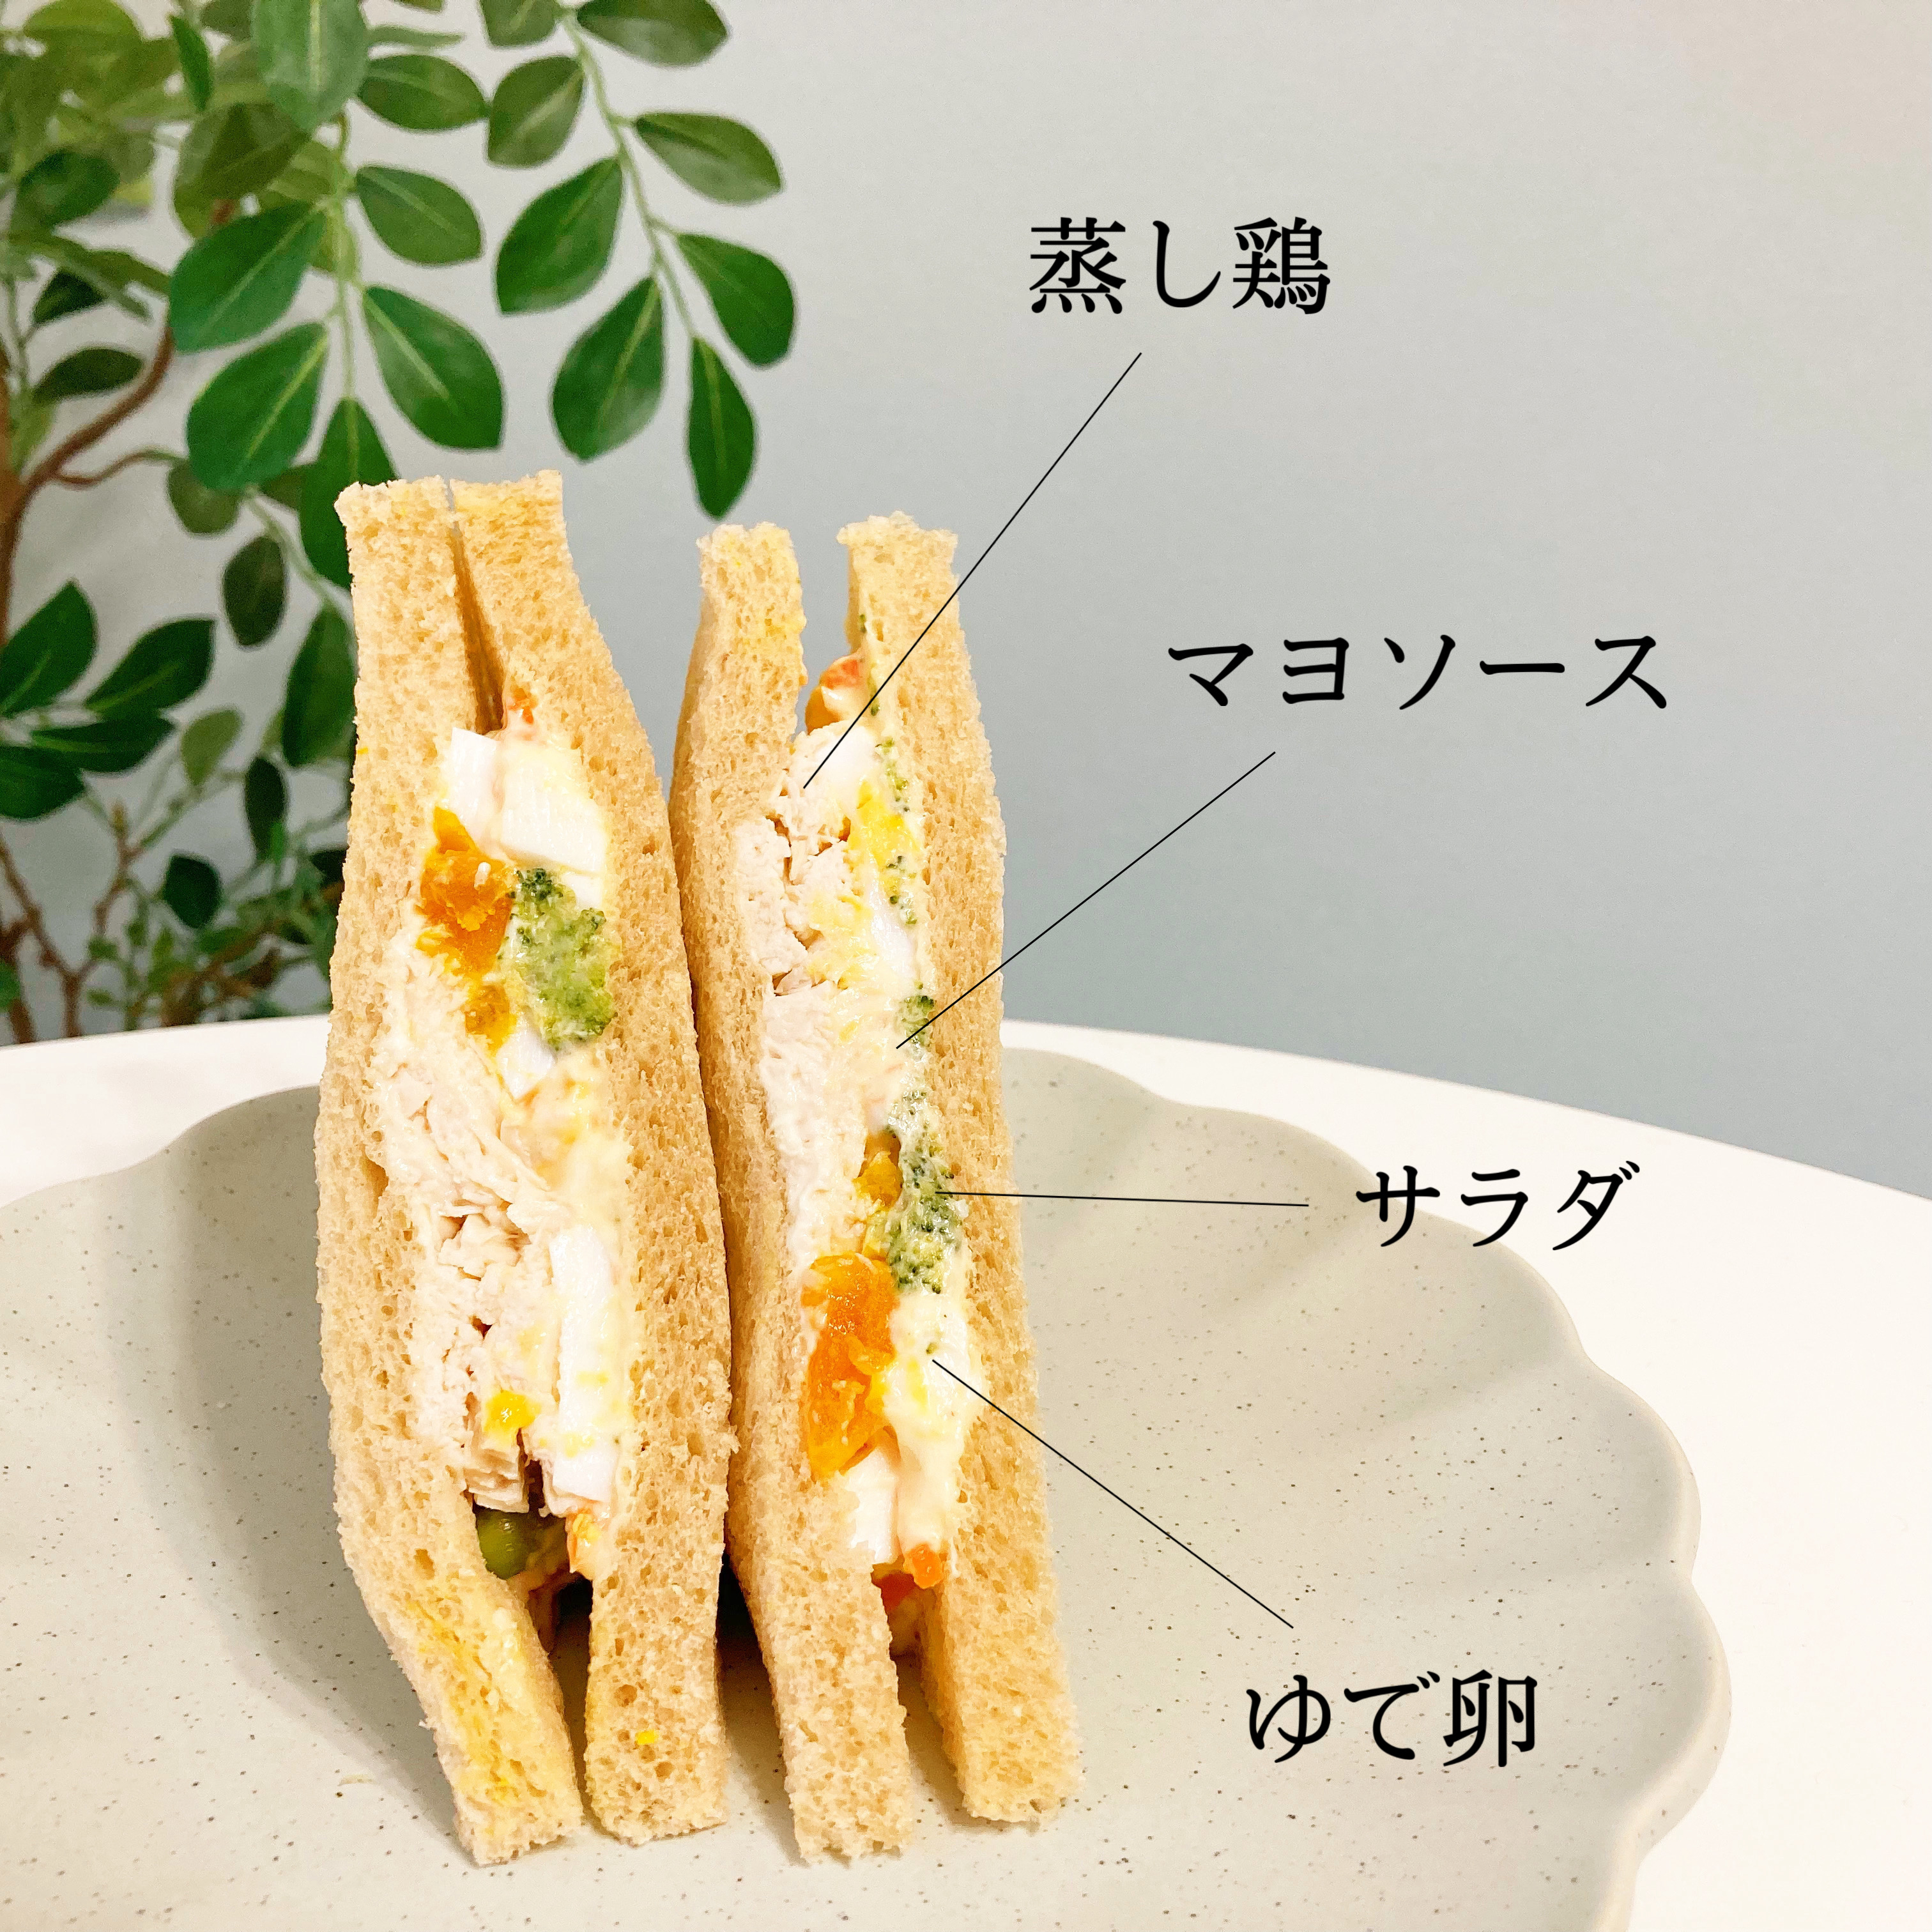 FamilyMart（ファミリーマート）の新商品「全粒粉サンド サラダチキンとたまご」